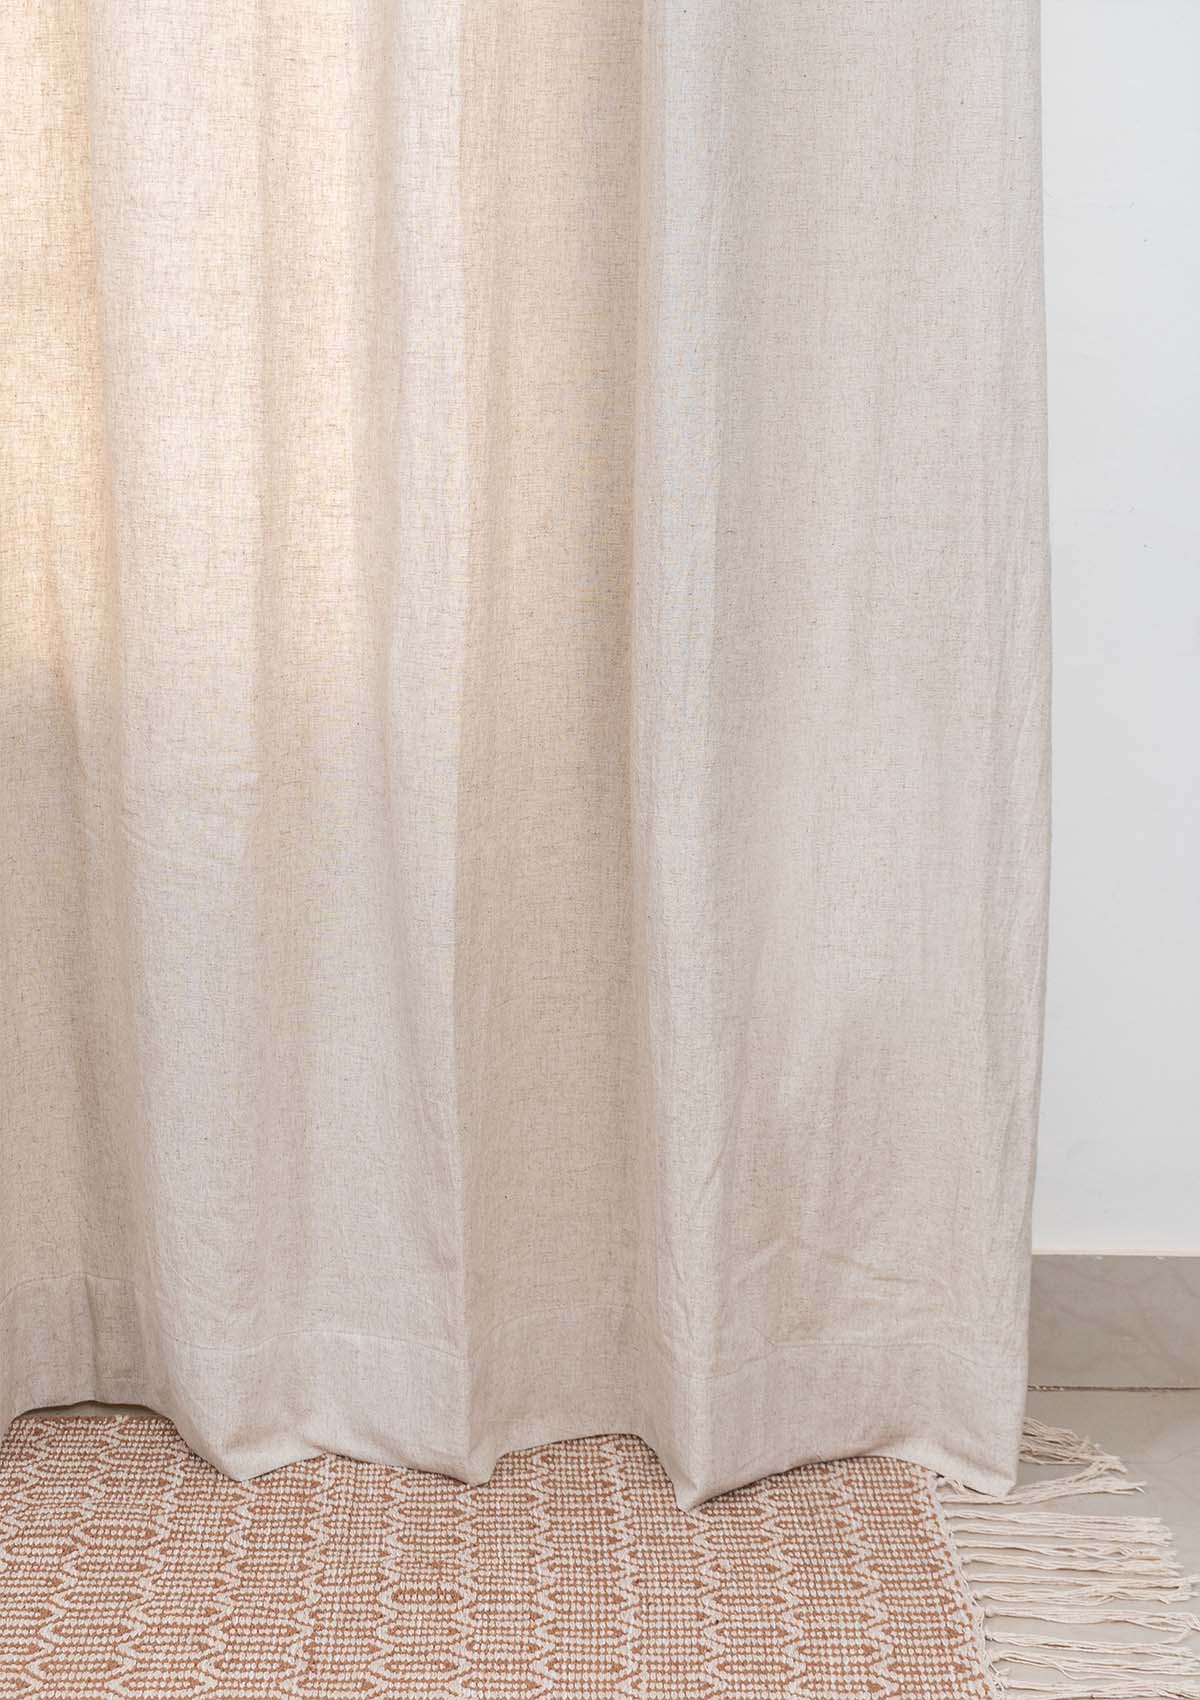 Solid linen Beige Customizable Cotton plain curtain for bedroom - Room darkening